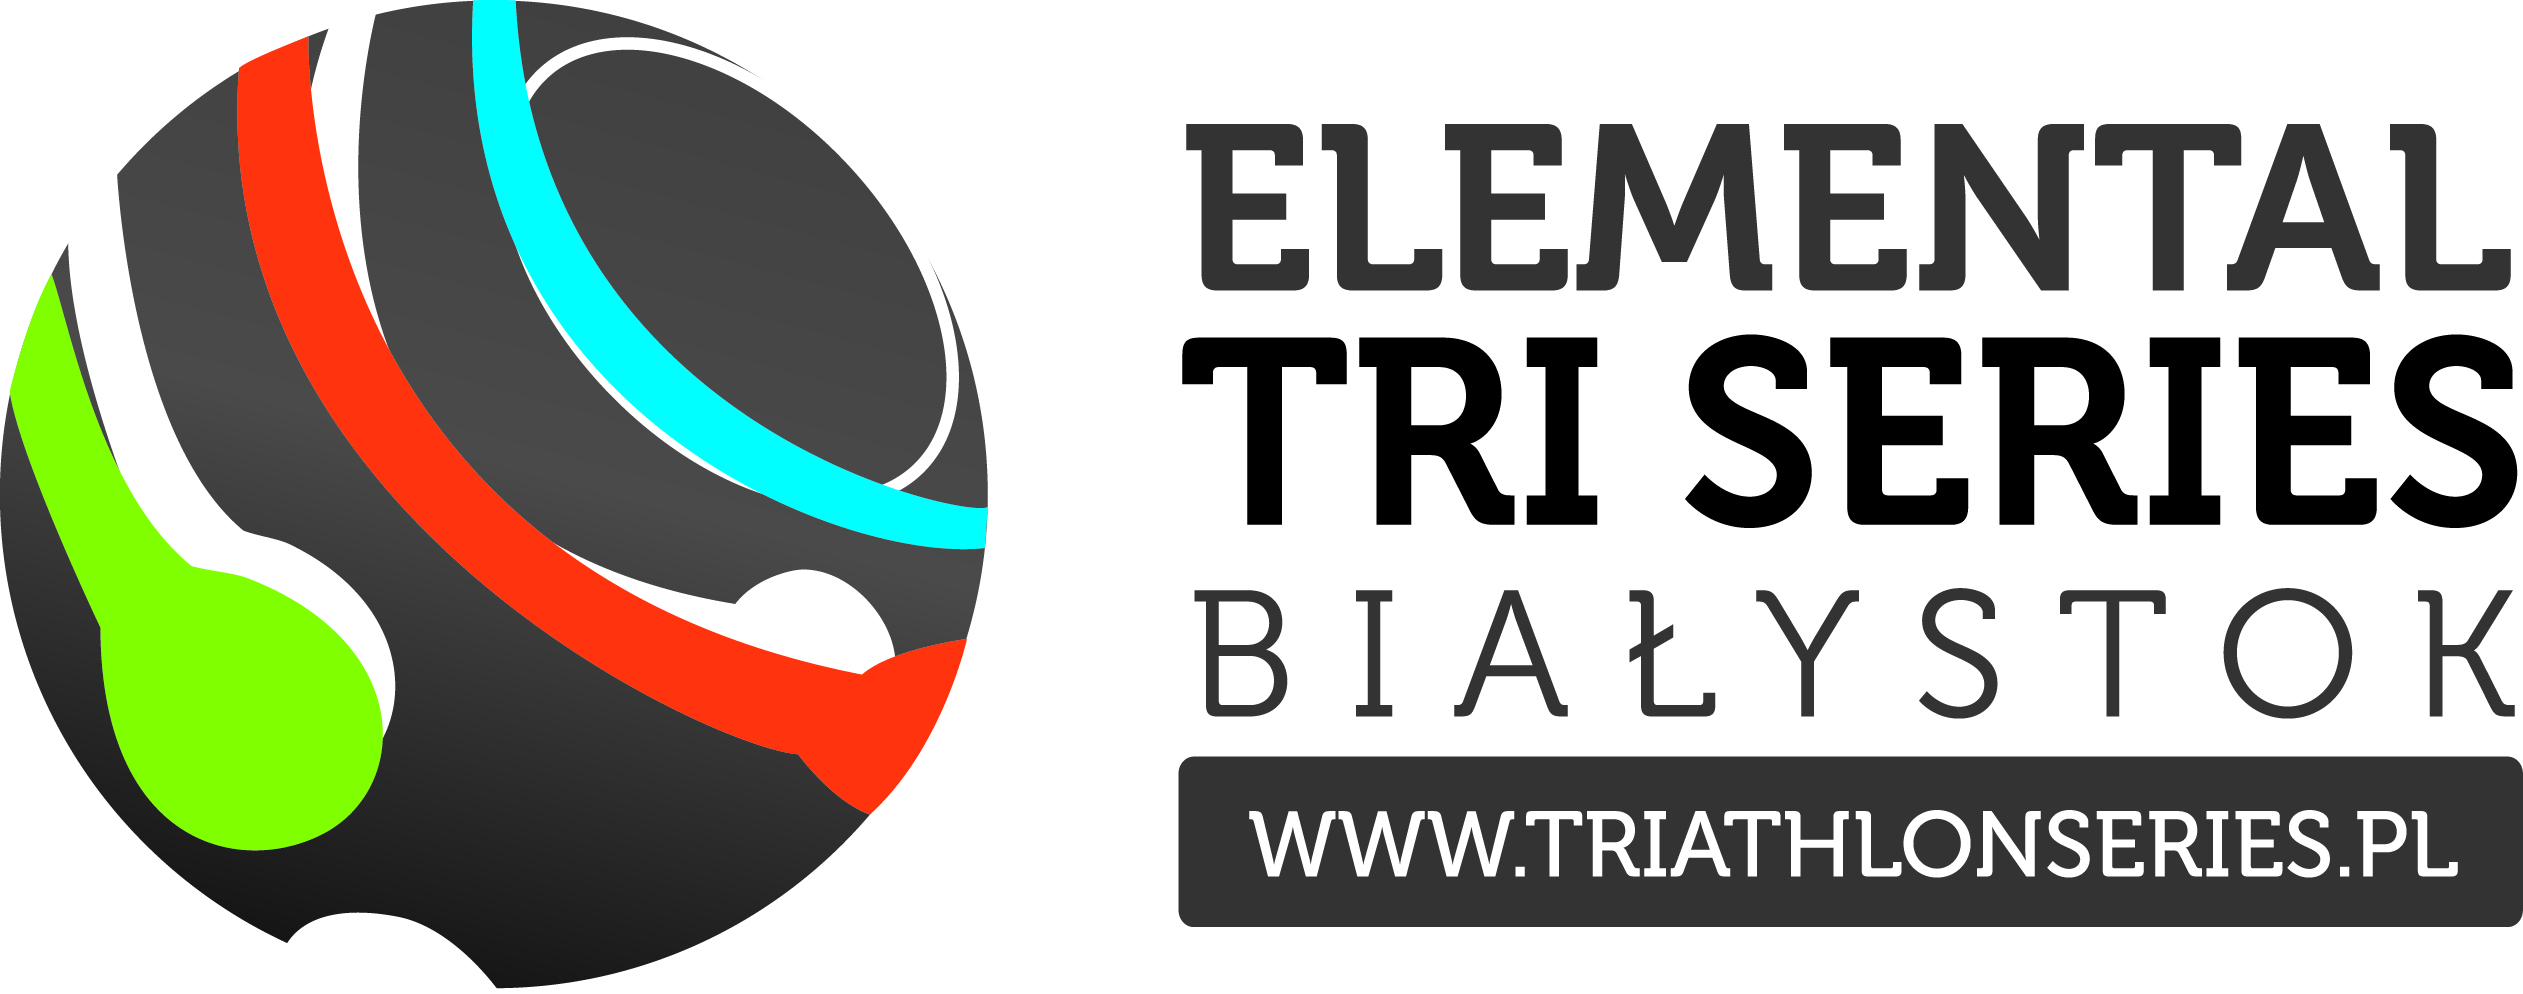 ets2015 elemental_tri_series_bialystok_www